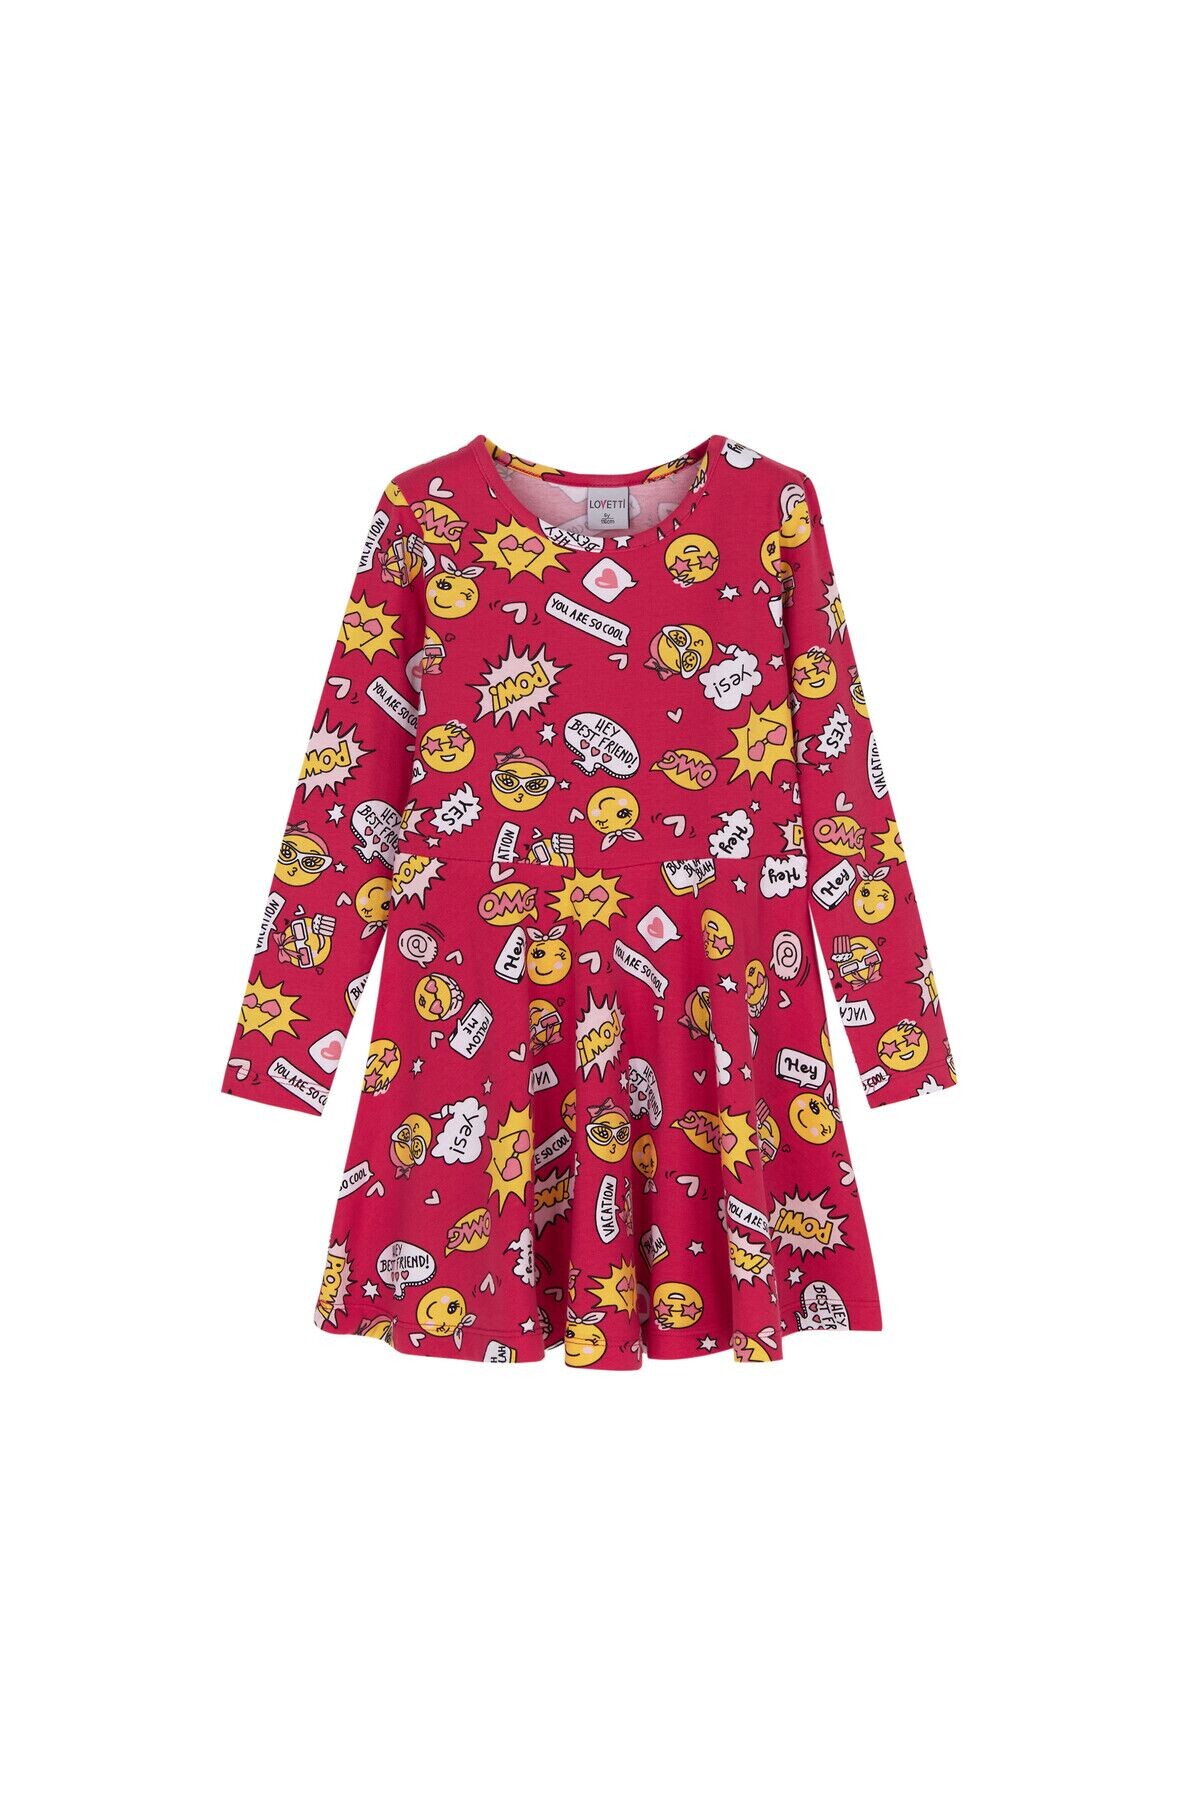 5-8 Years Old So Cool Pattern Long Sleeves Plain Dress |Lovetti